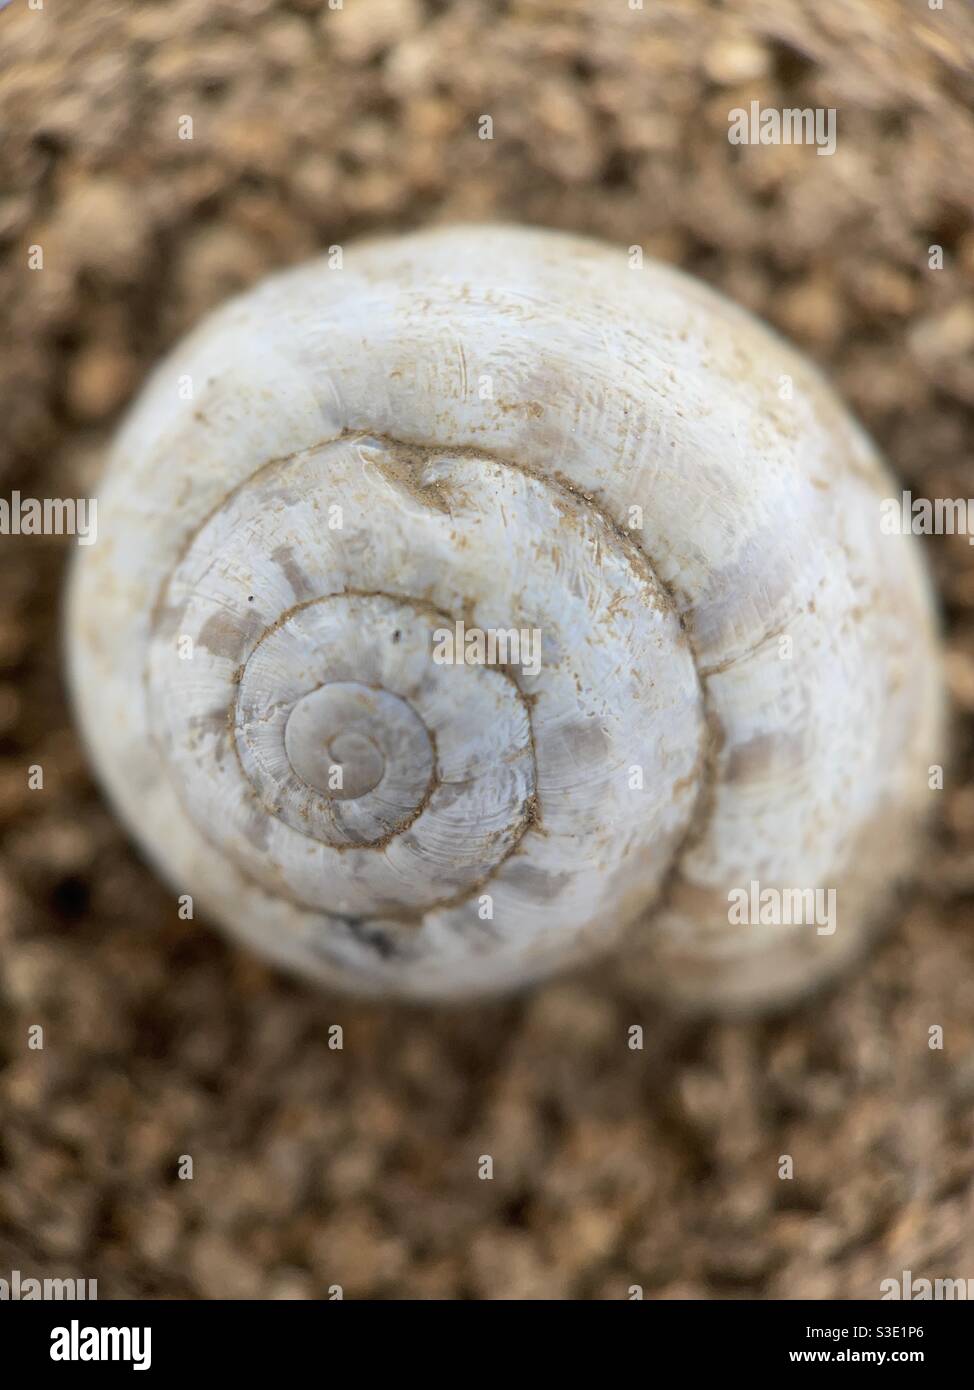 Snail shell, closeup view Stock Photo